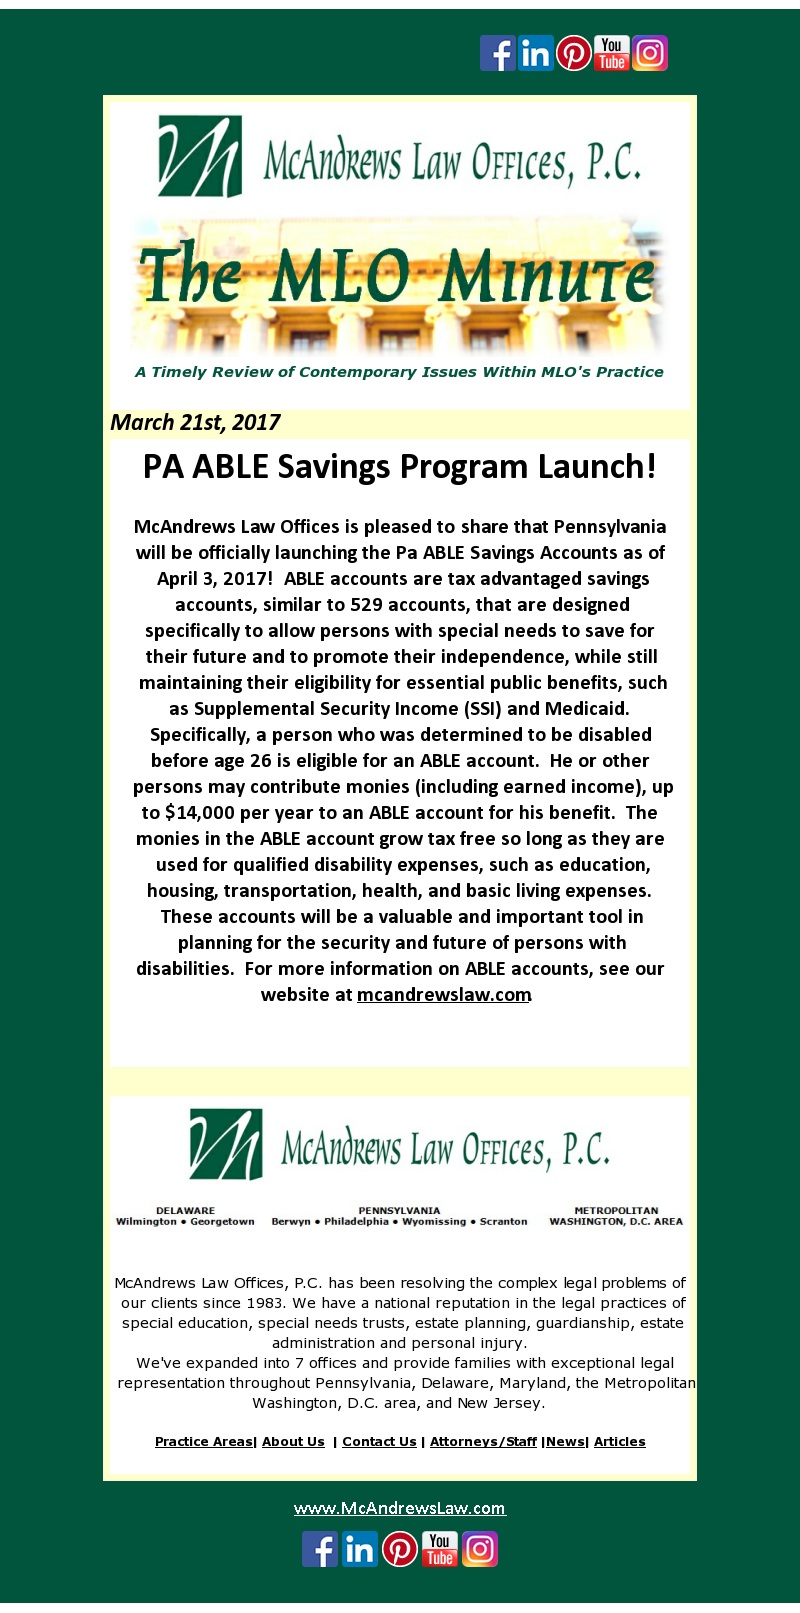 The MLO Minute PA ABLE Savings Program Launch